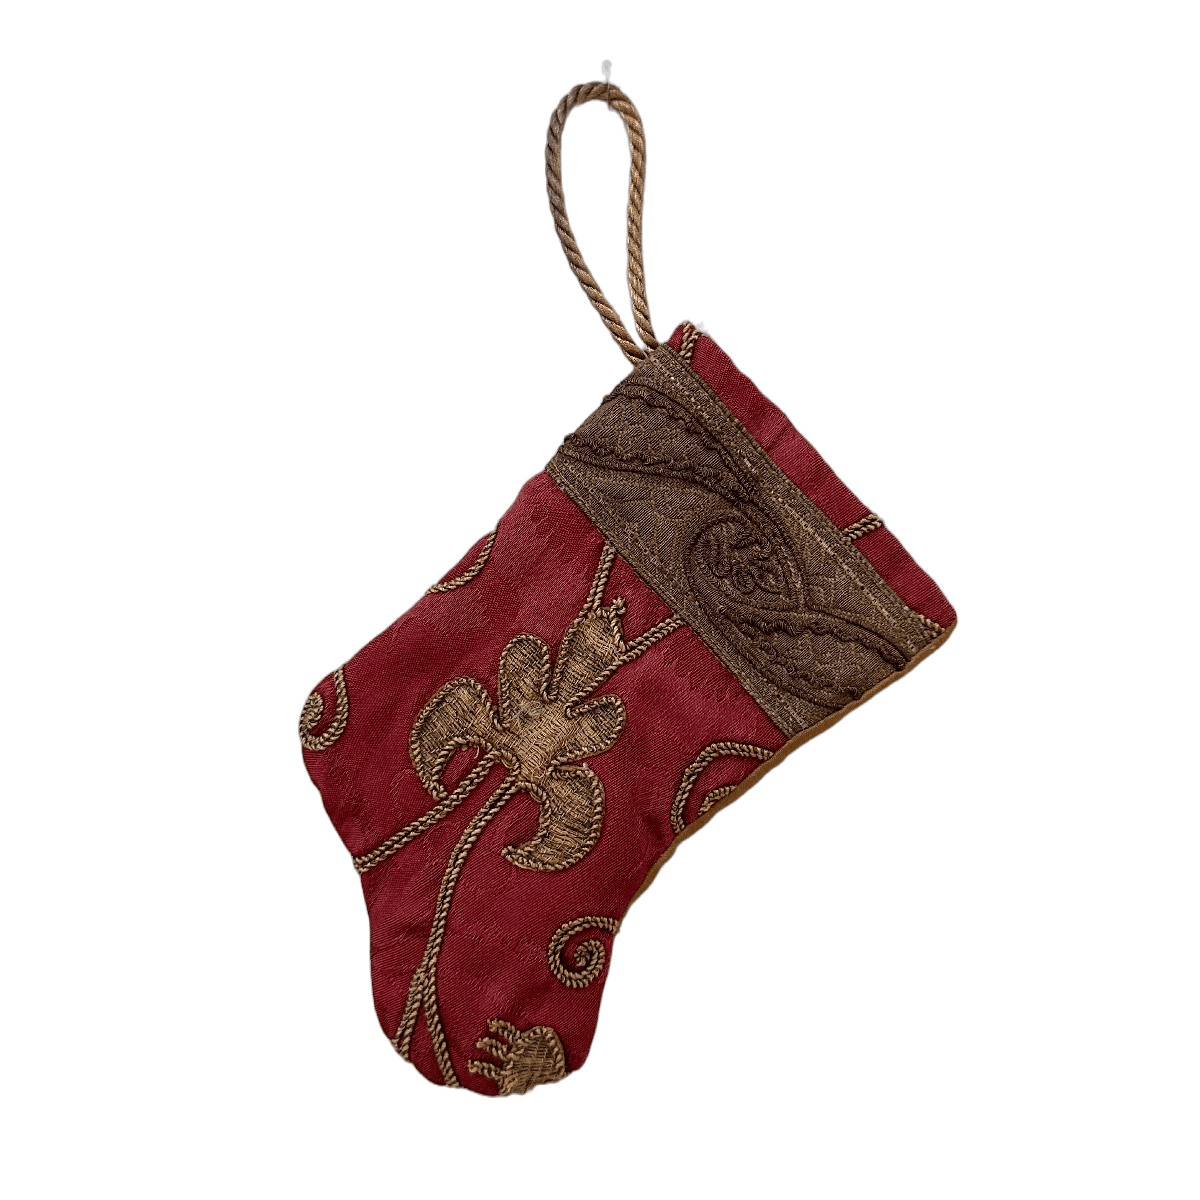 Handmade Mini Stocking Ornament from Antique & Vintage Textiles, Trims Ornament B. Viz Design A 